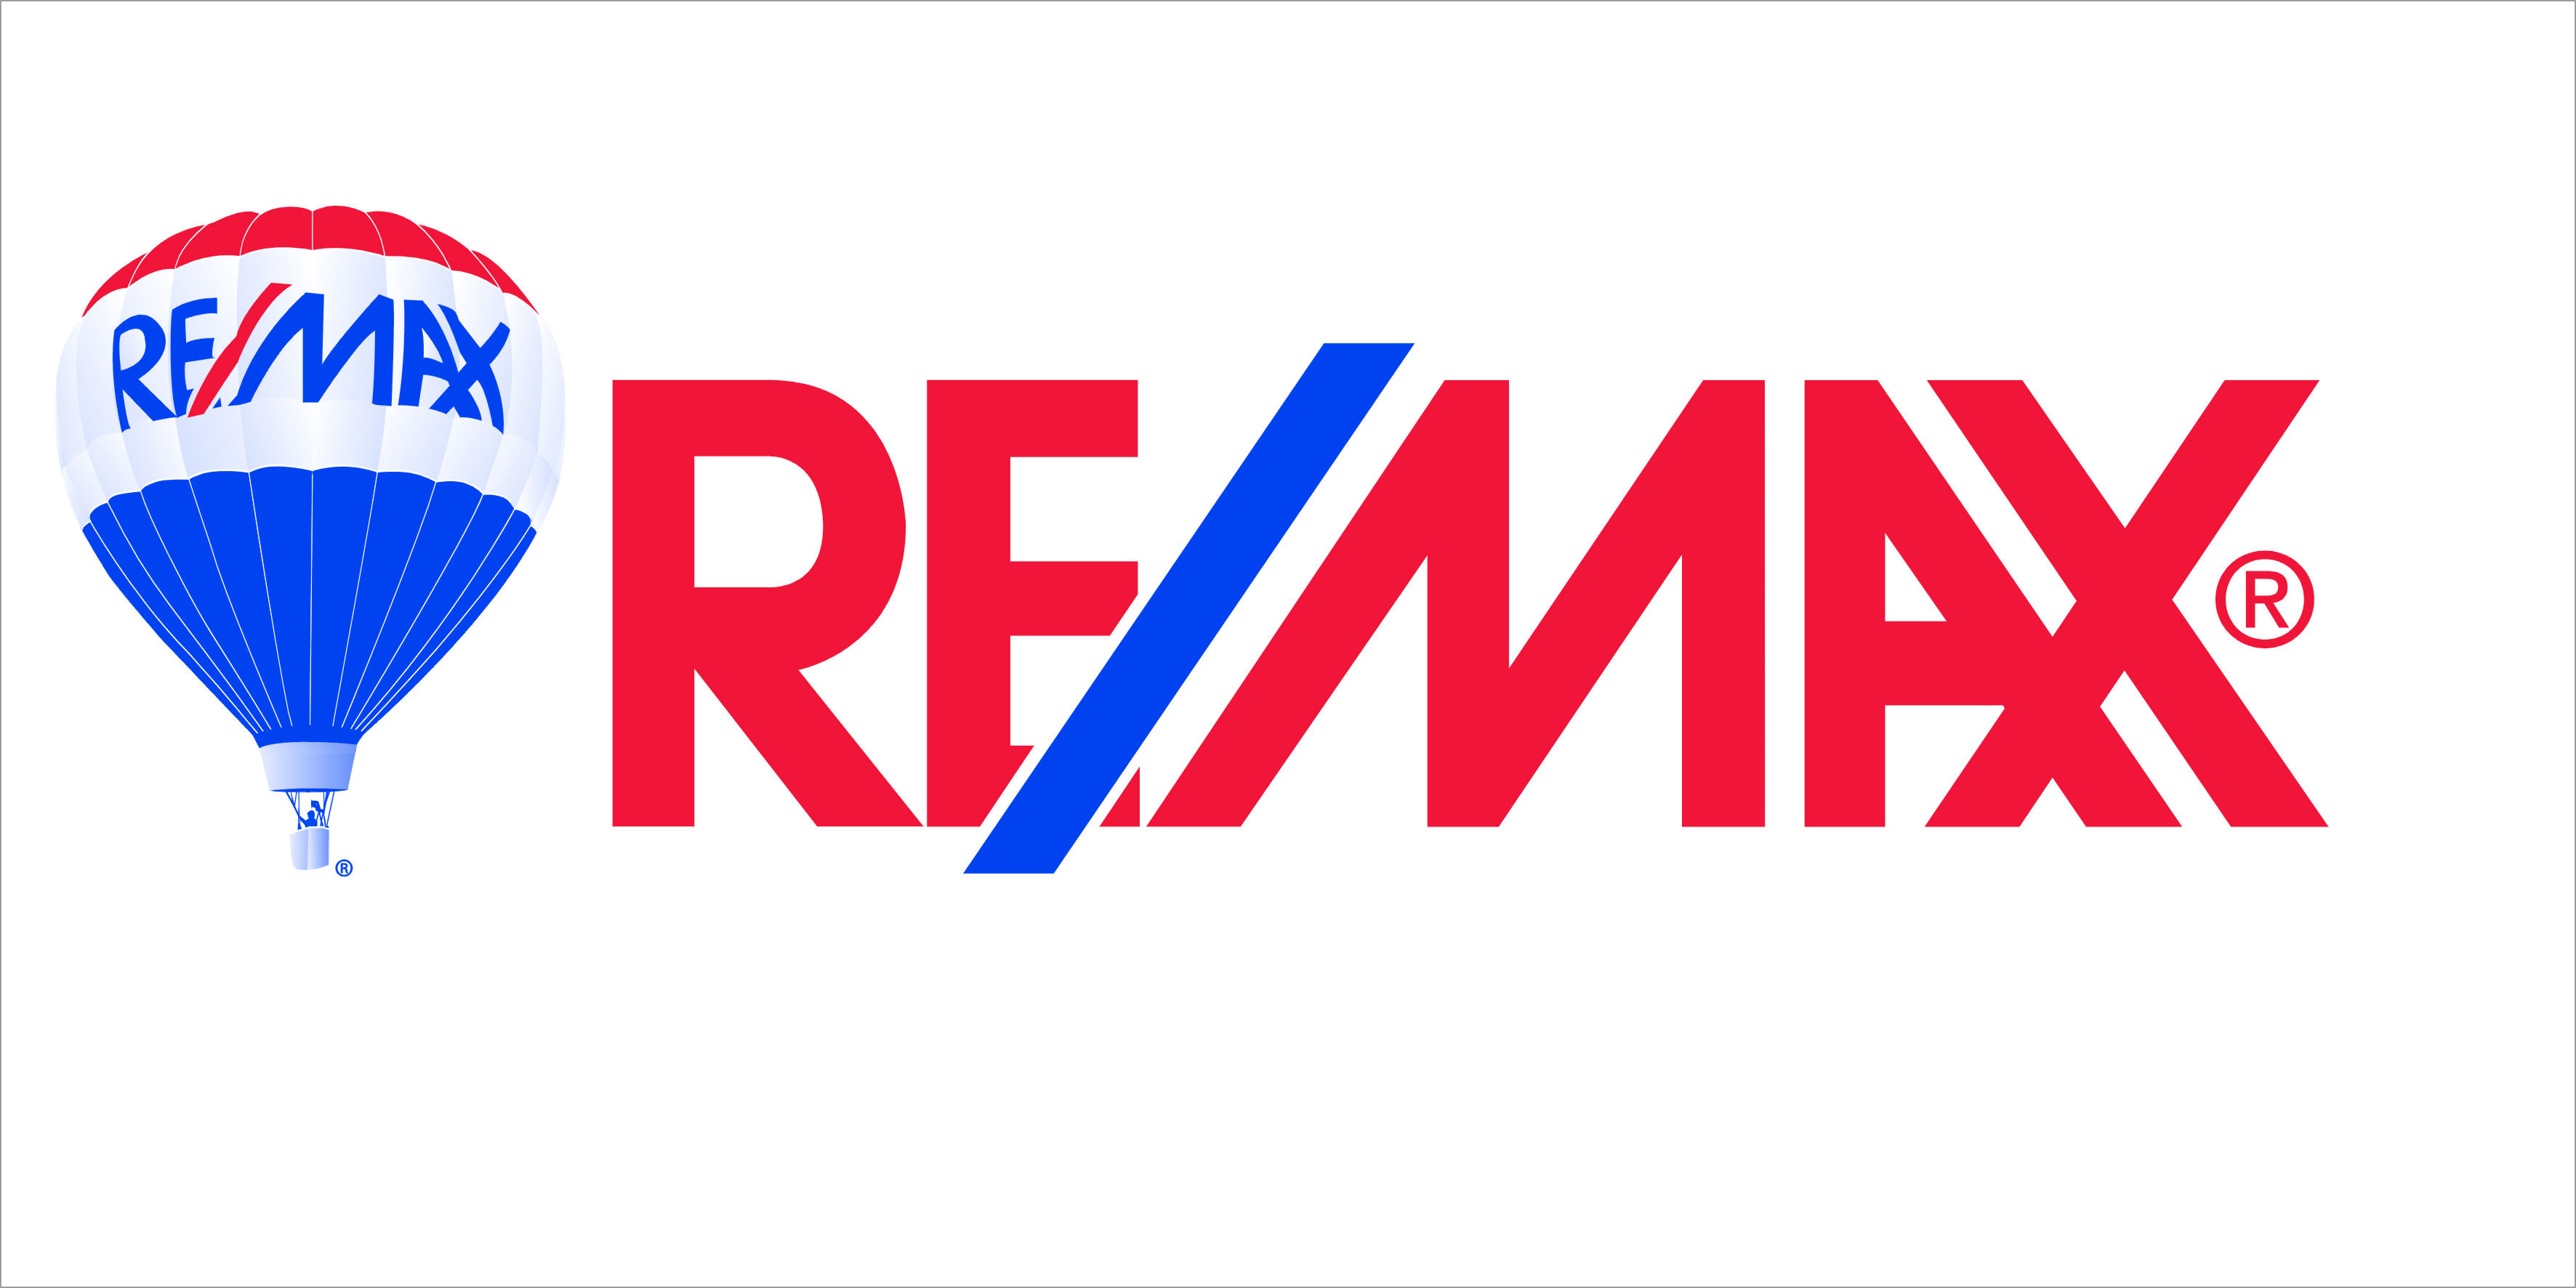 REMAX-logo - Sporteconomy